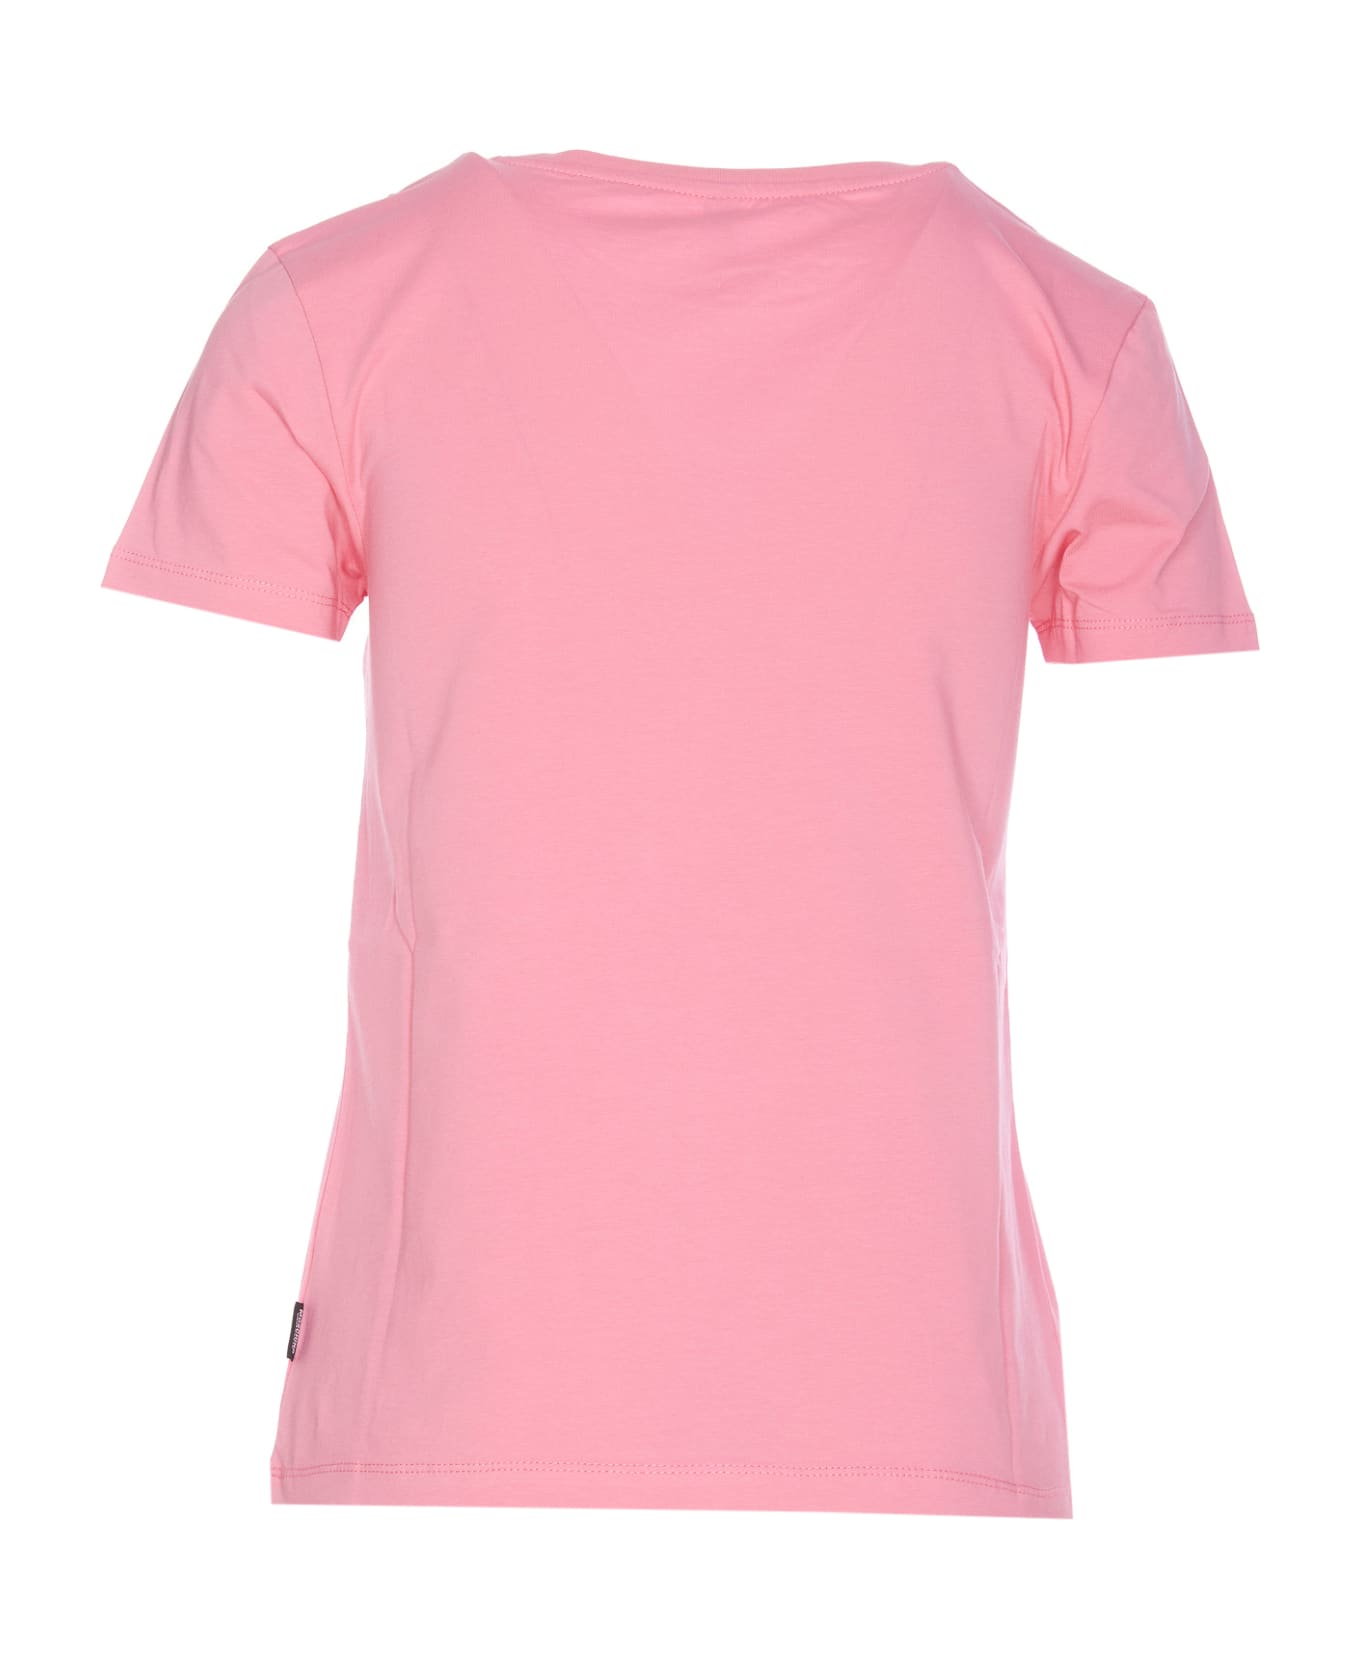 Moschino Underbear Logo T-shirt - Rosa